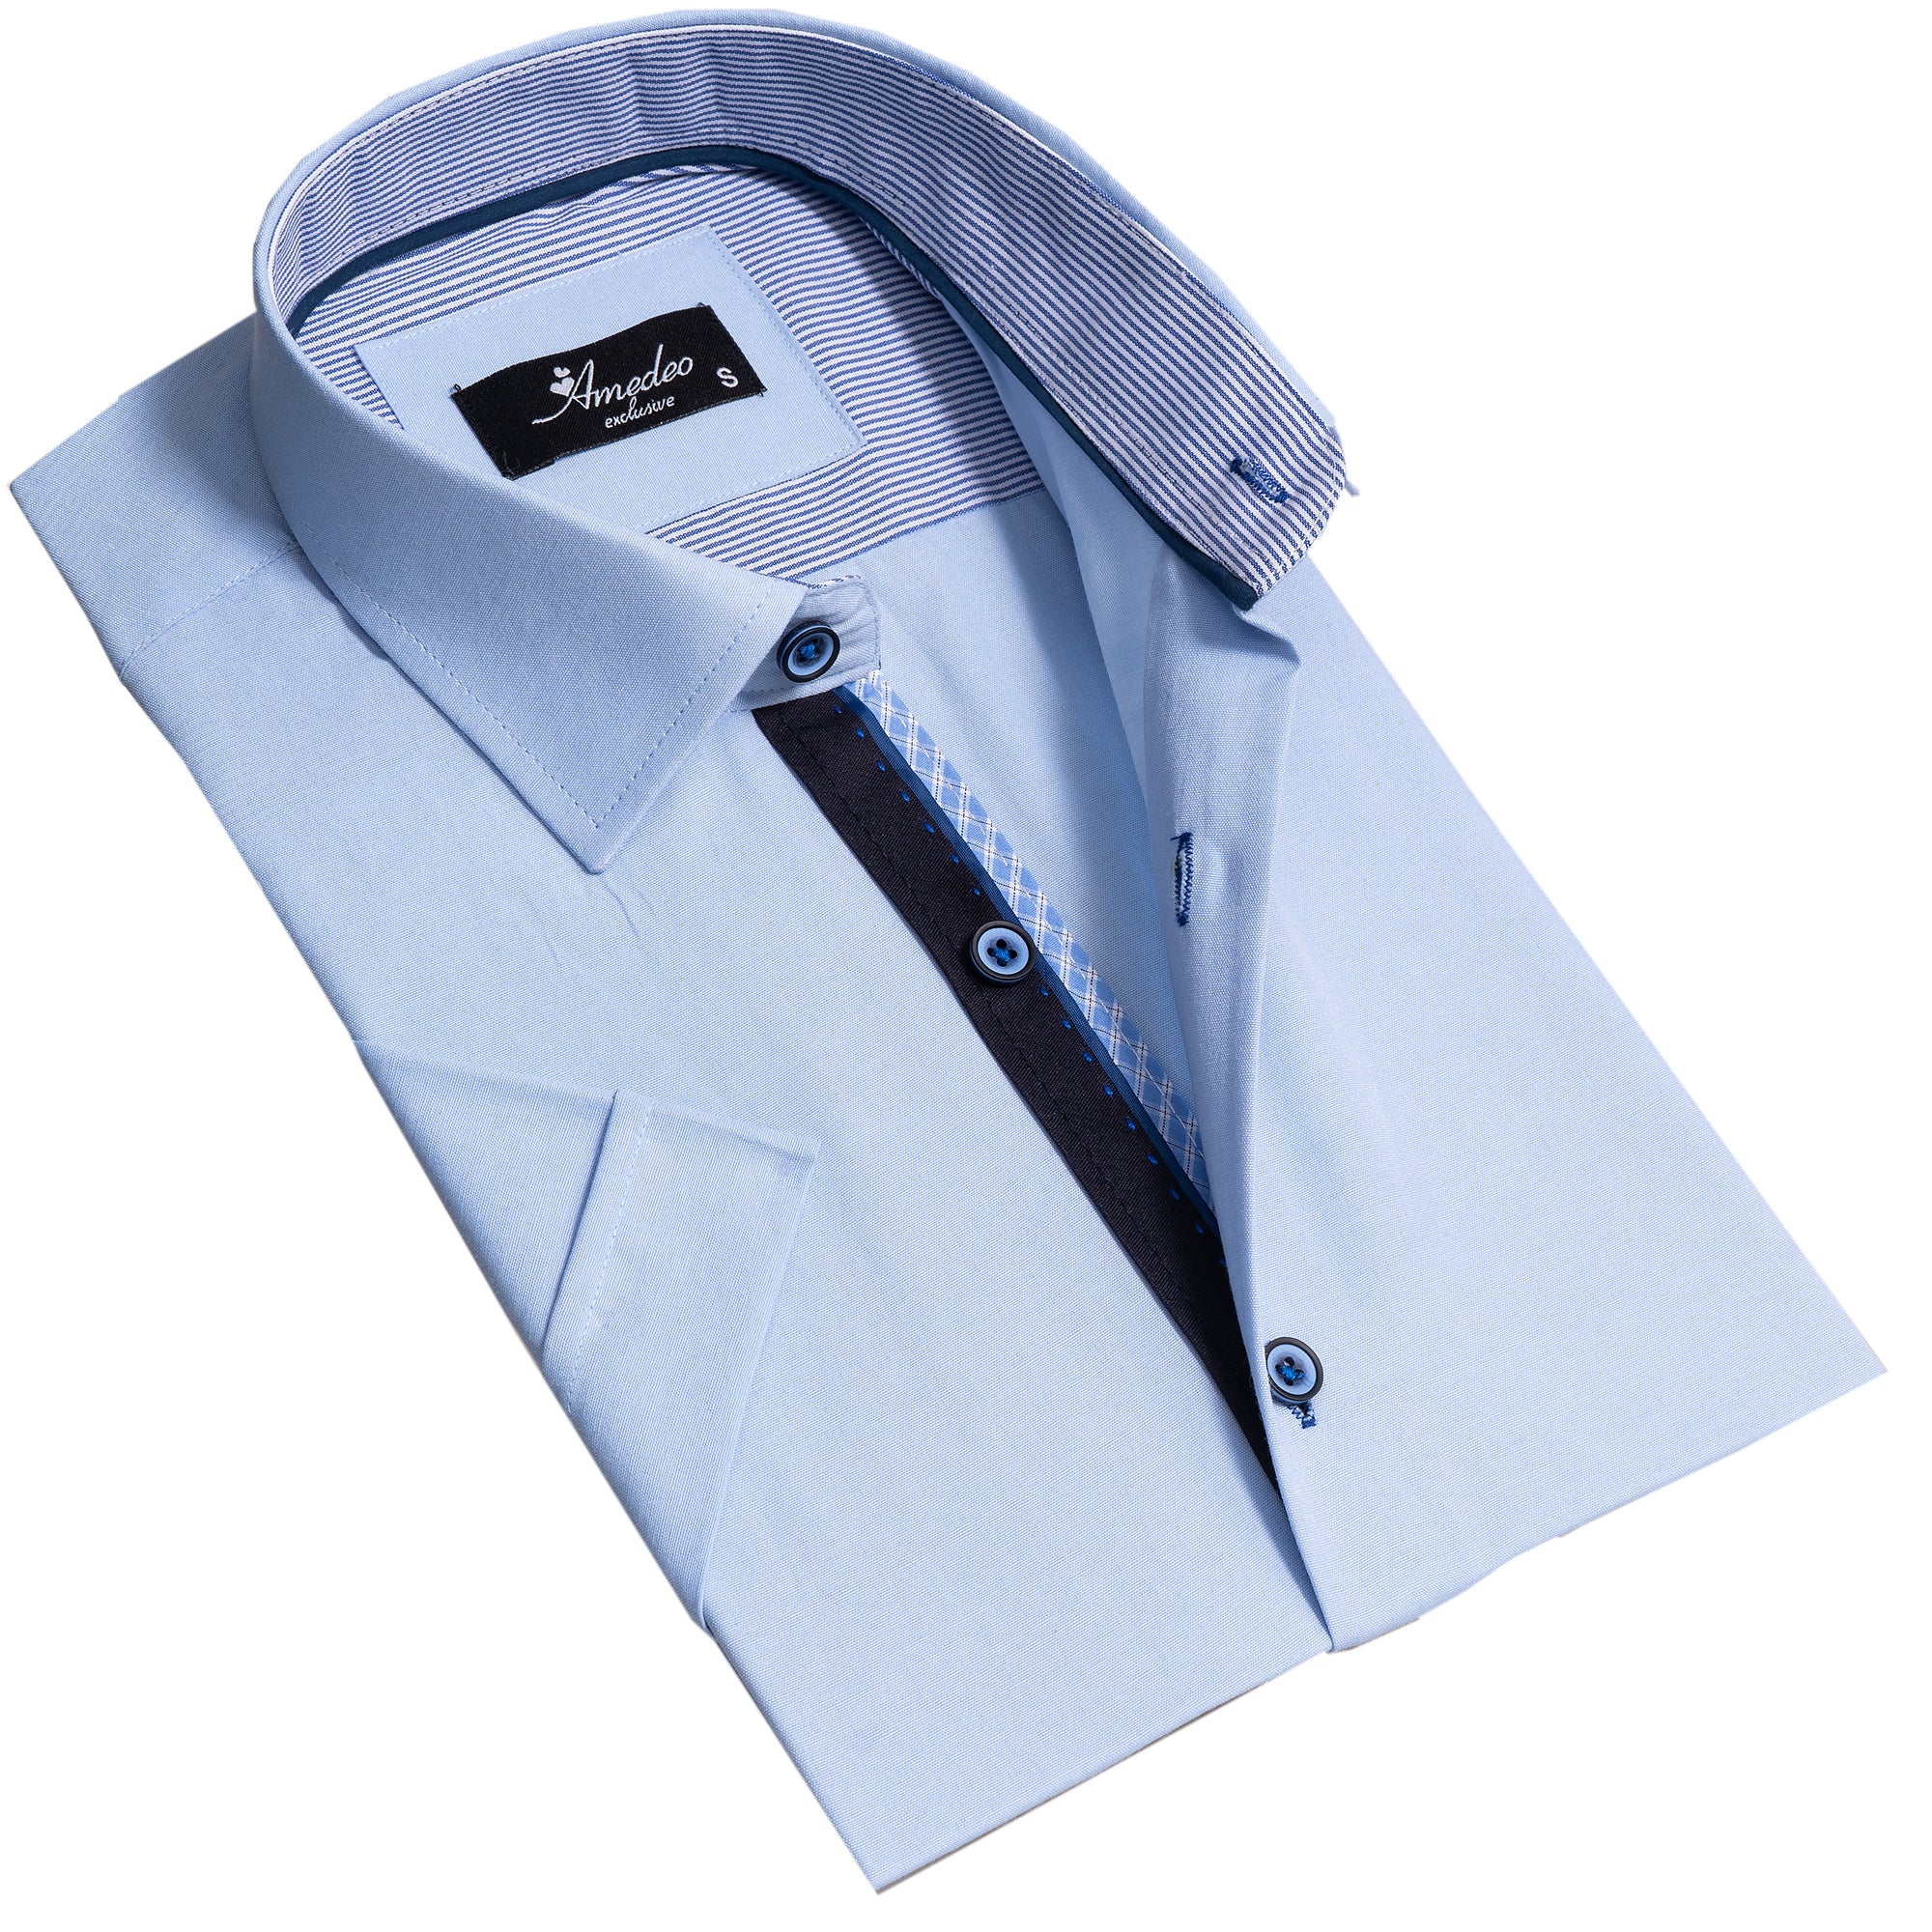 Soft Light Blue Mens Short Sleeve Button up Shirts - Tailored Slim Fit Cotton Dress Shirts